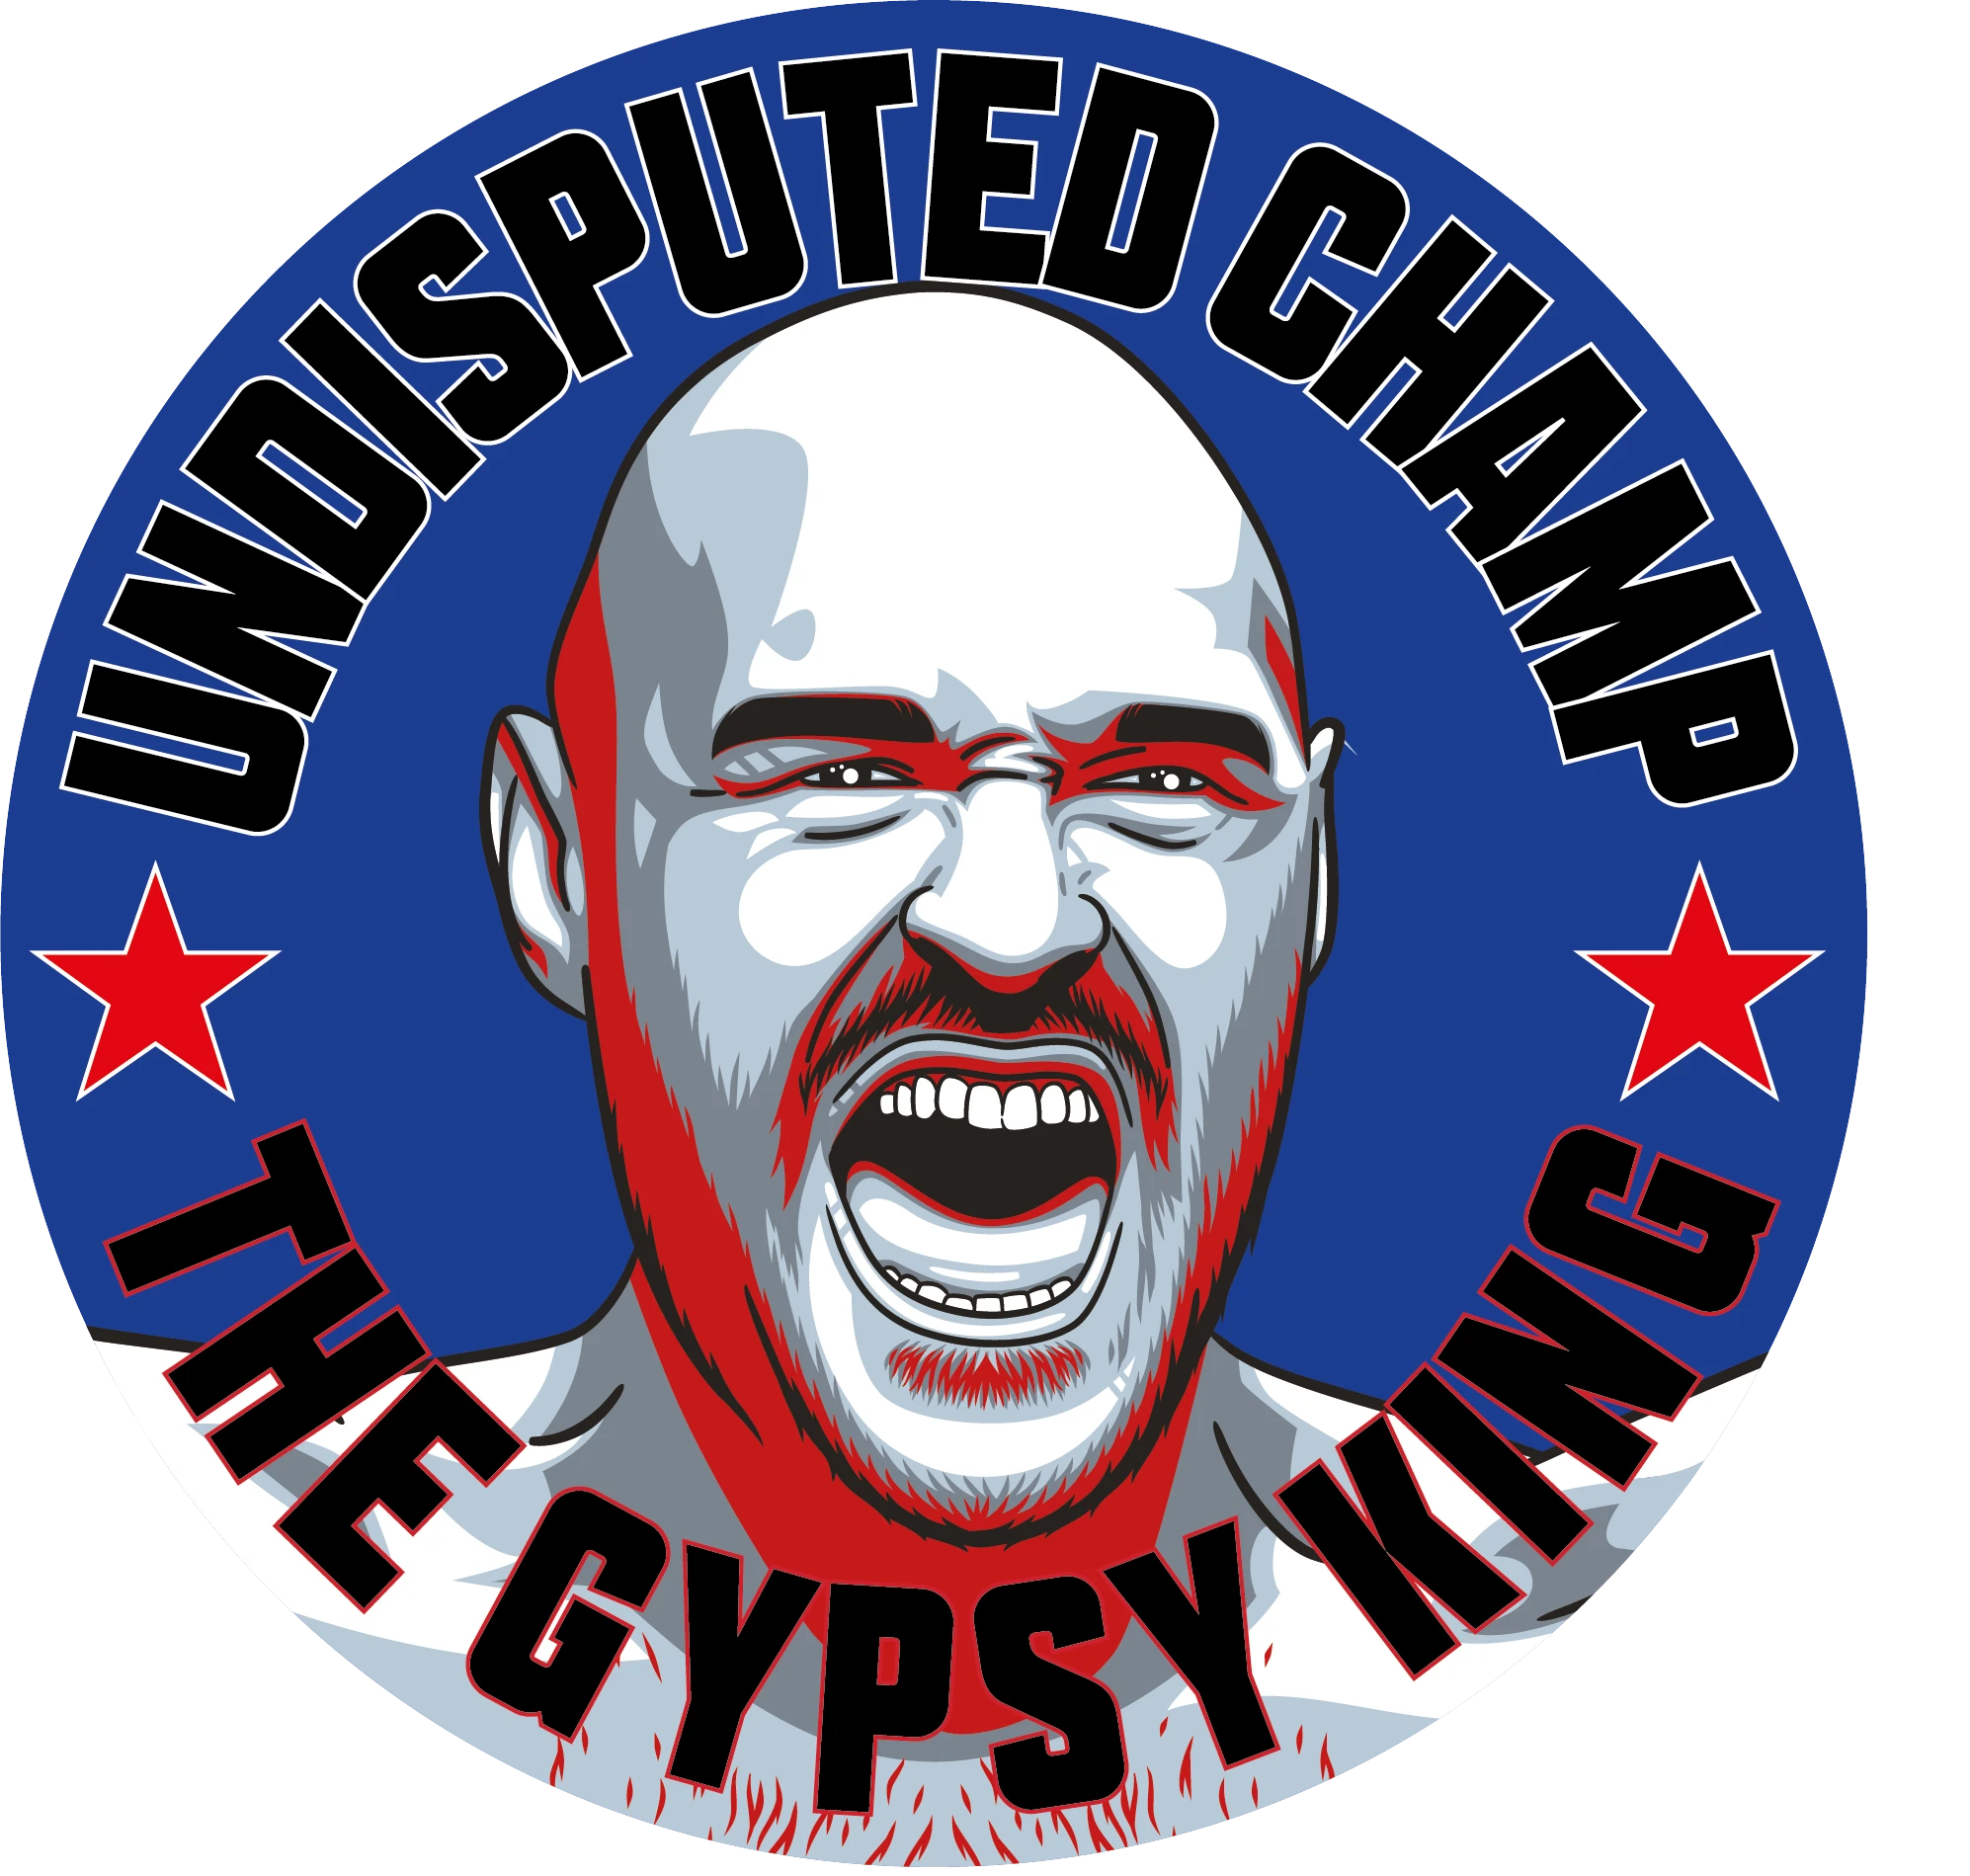 Tyson Fury World Heavyweight Champion campaign stickers Gypsy King #GetBehindTheLads